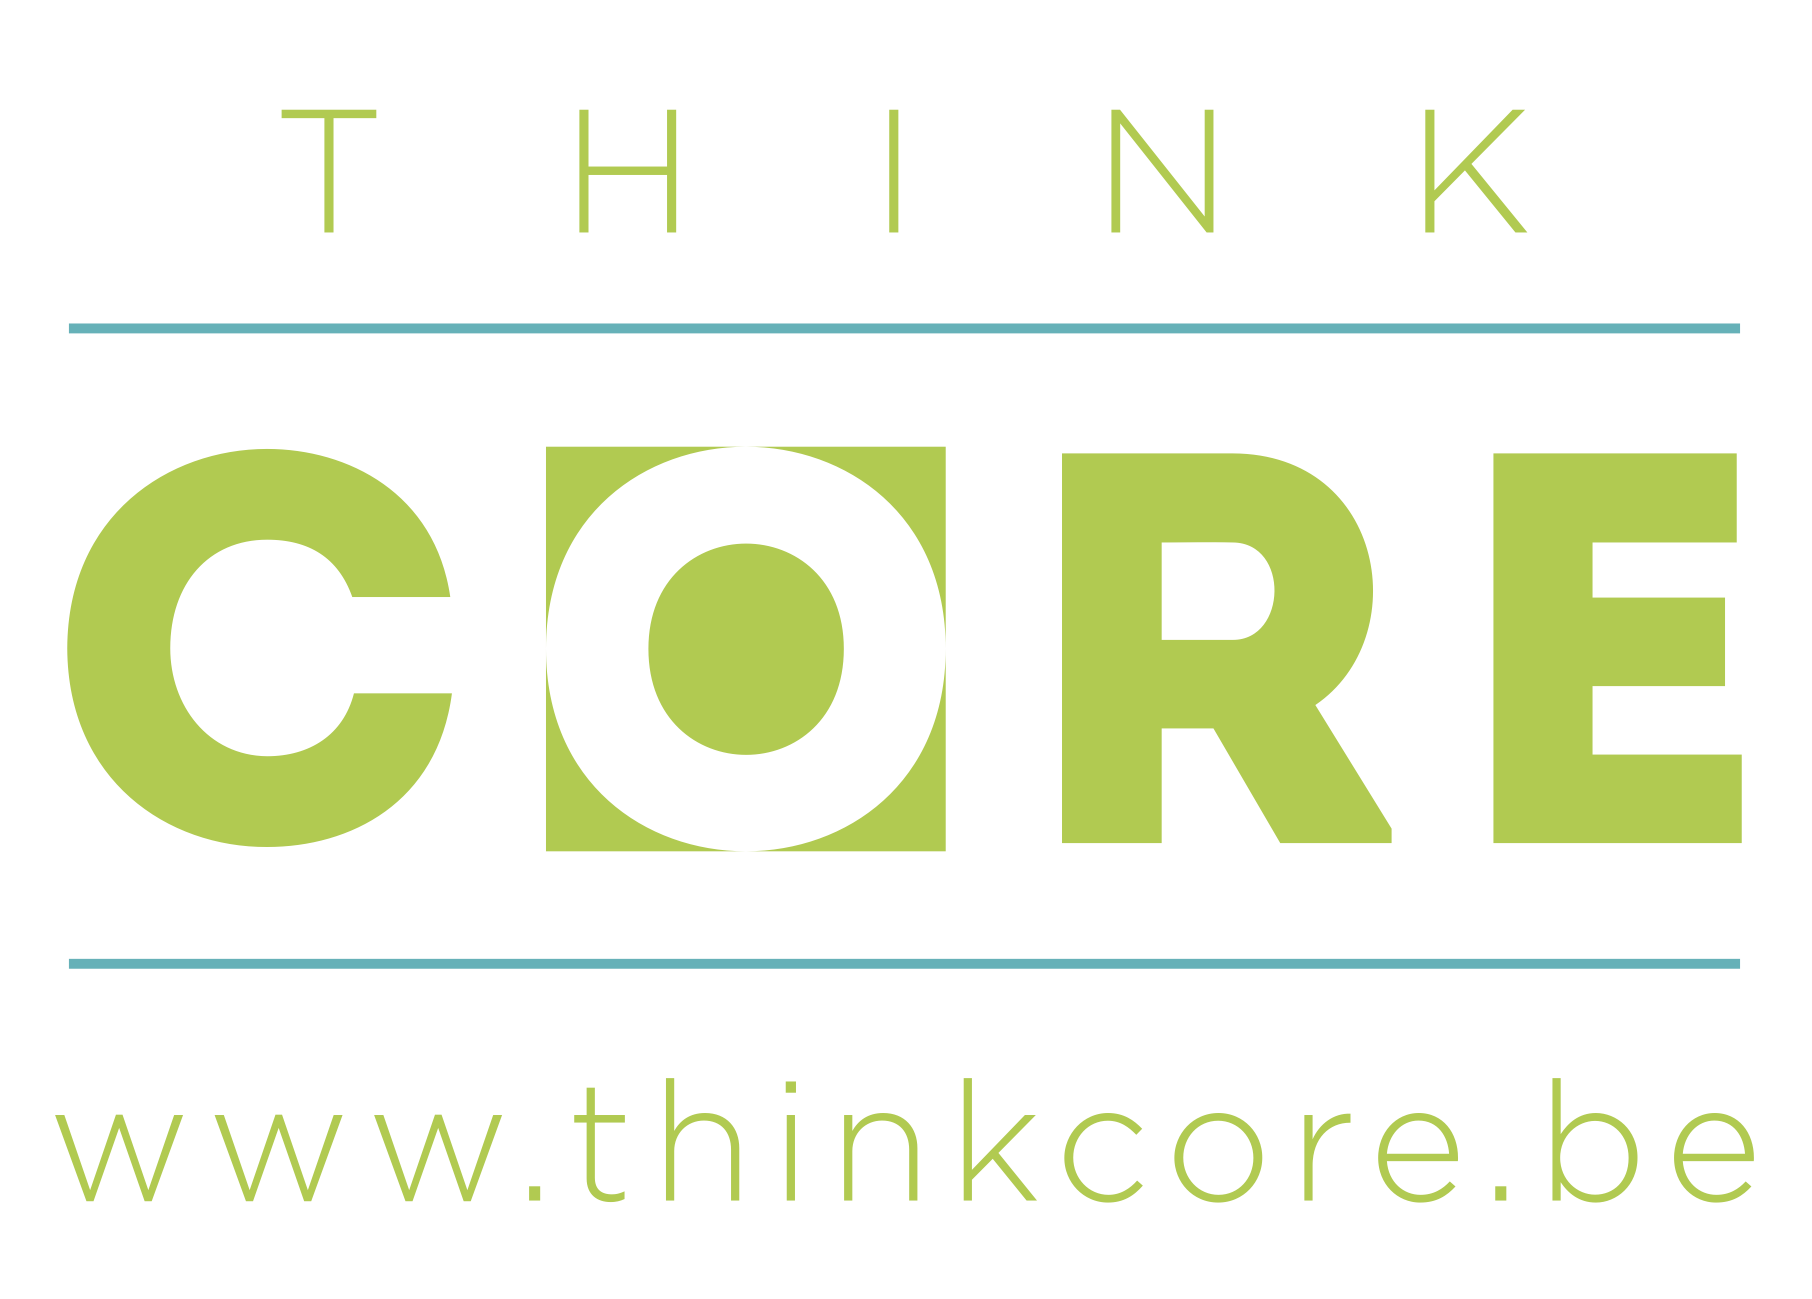 Logo Core